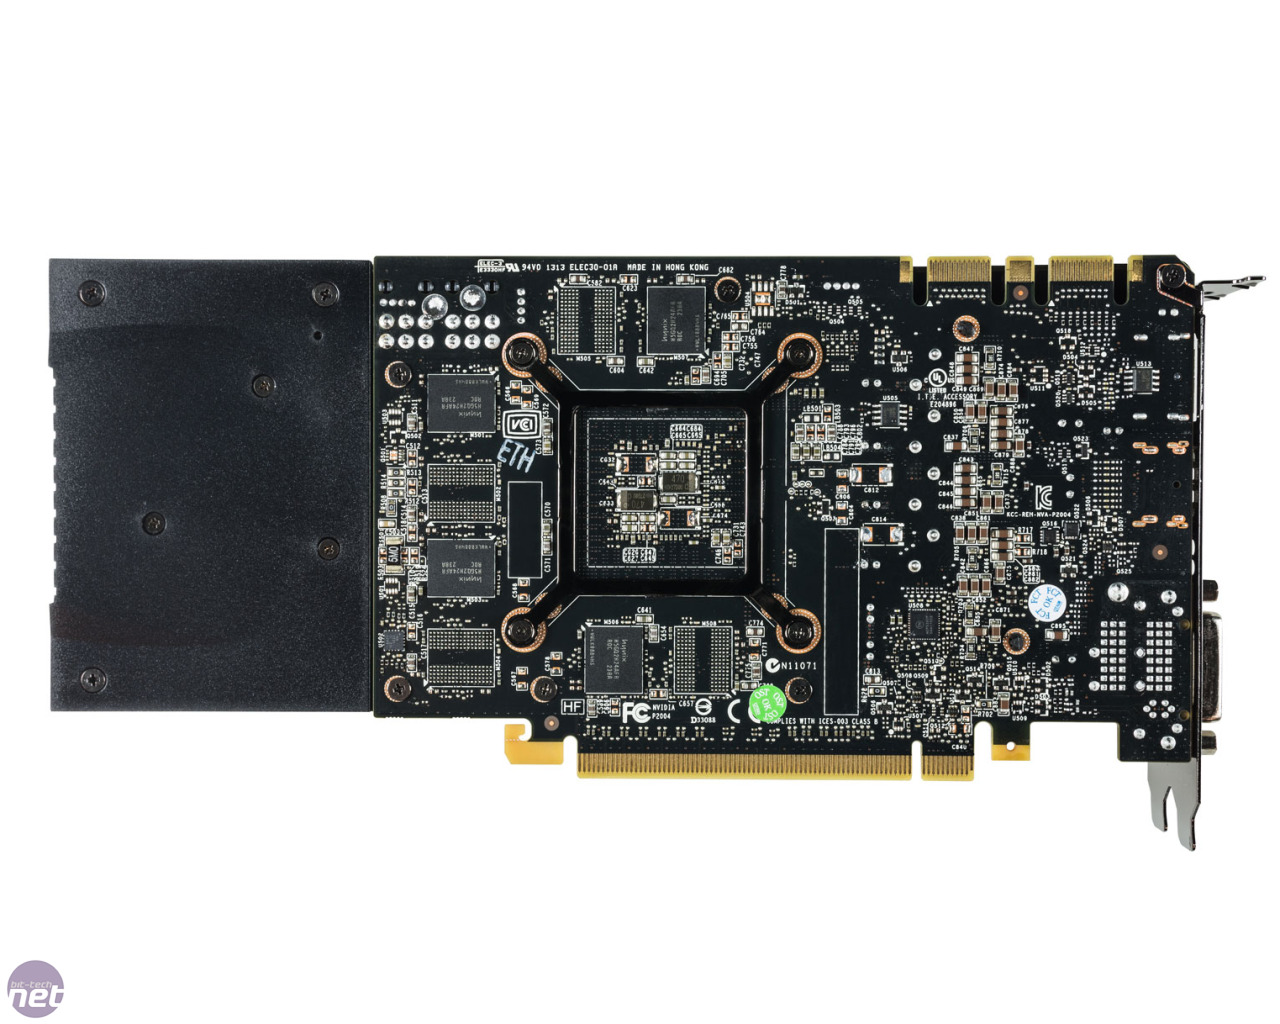 Nvidia GeForce GTX 760 2GB Review | bit 